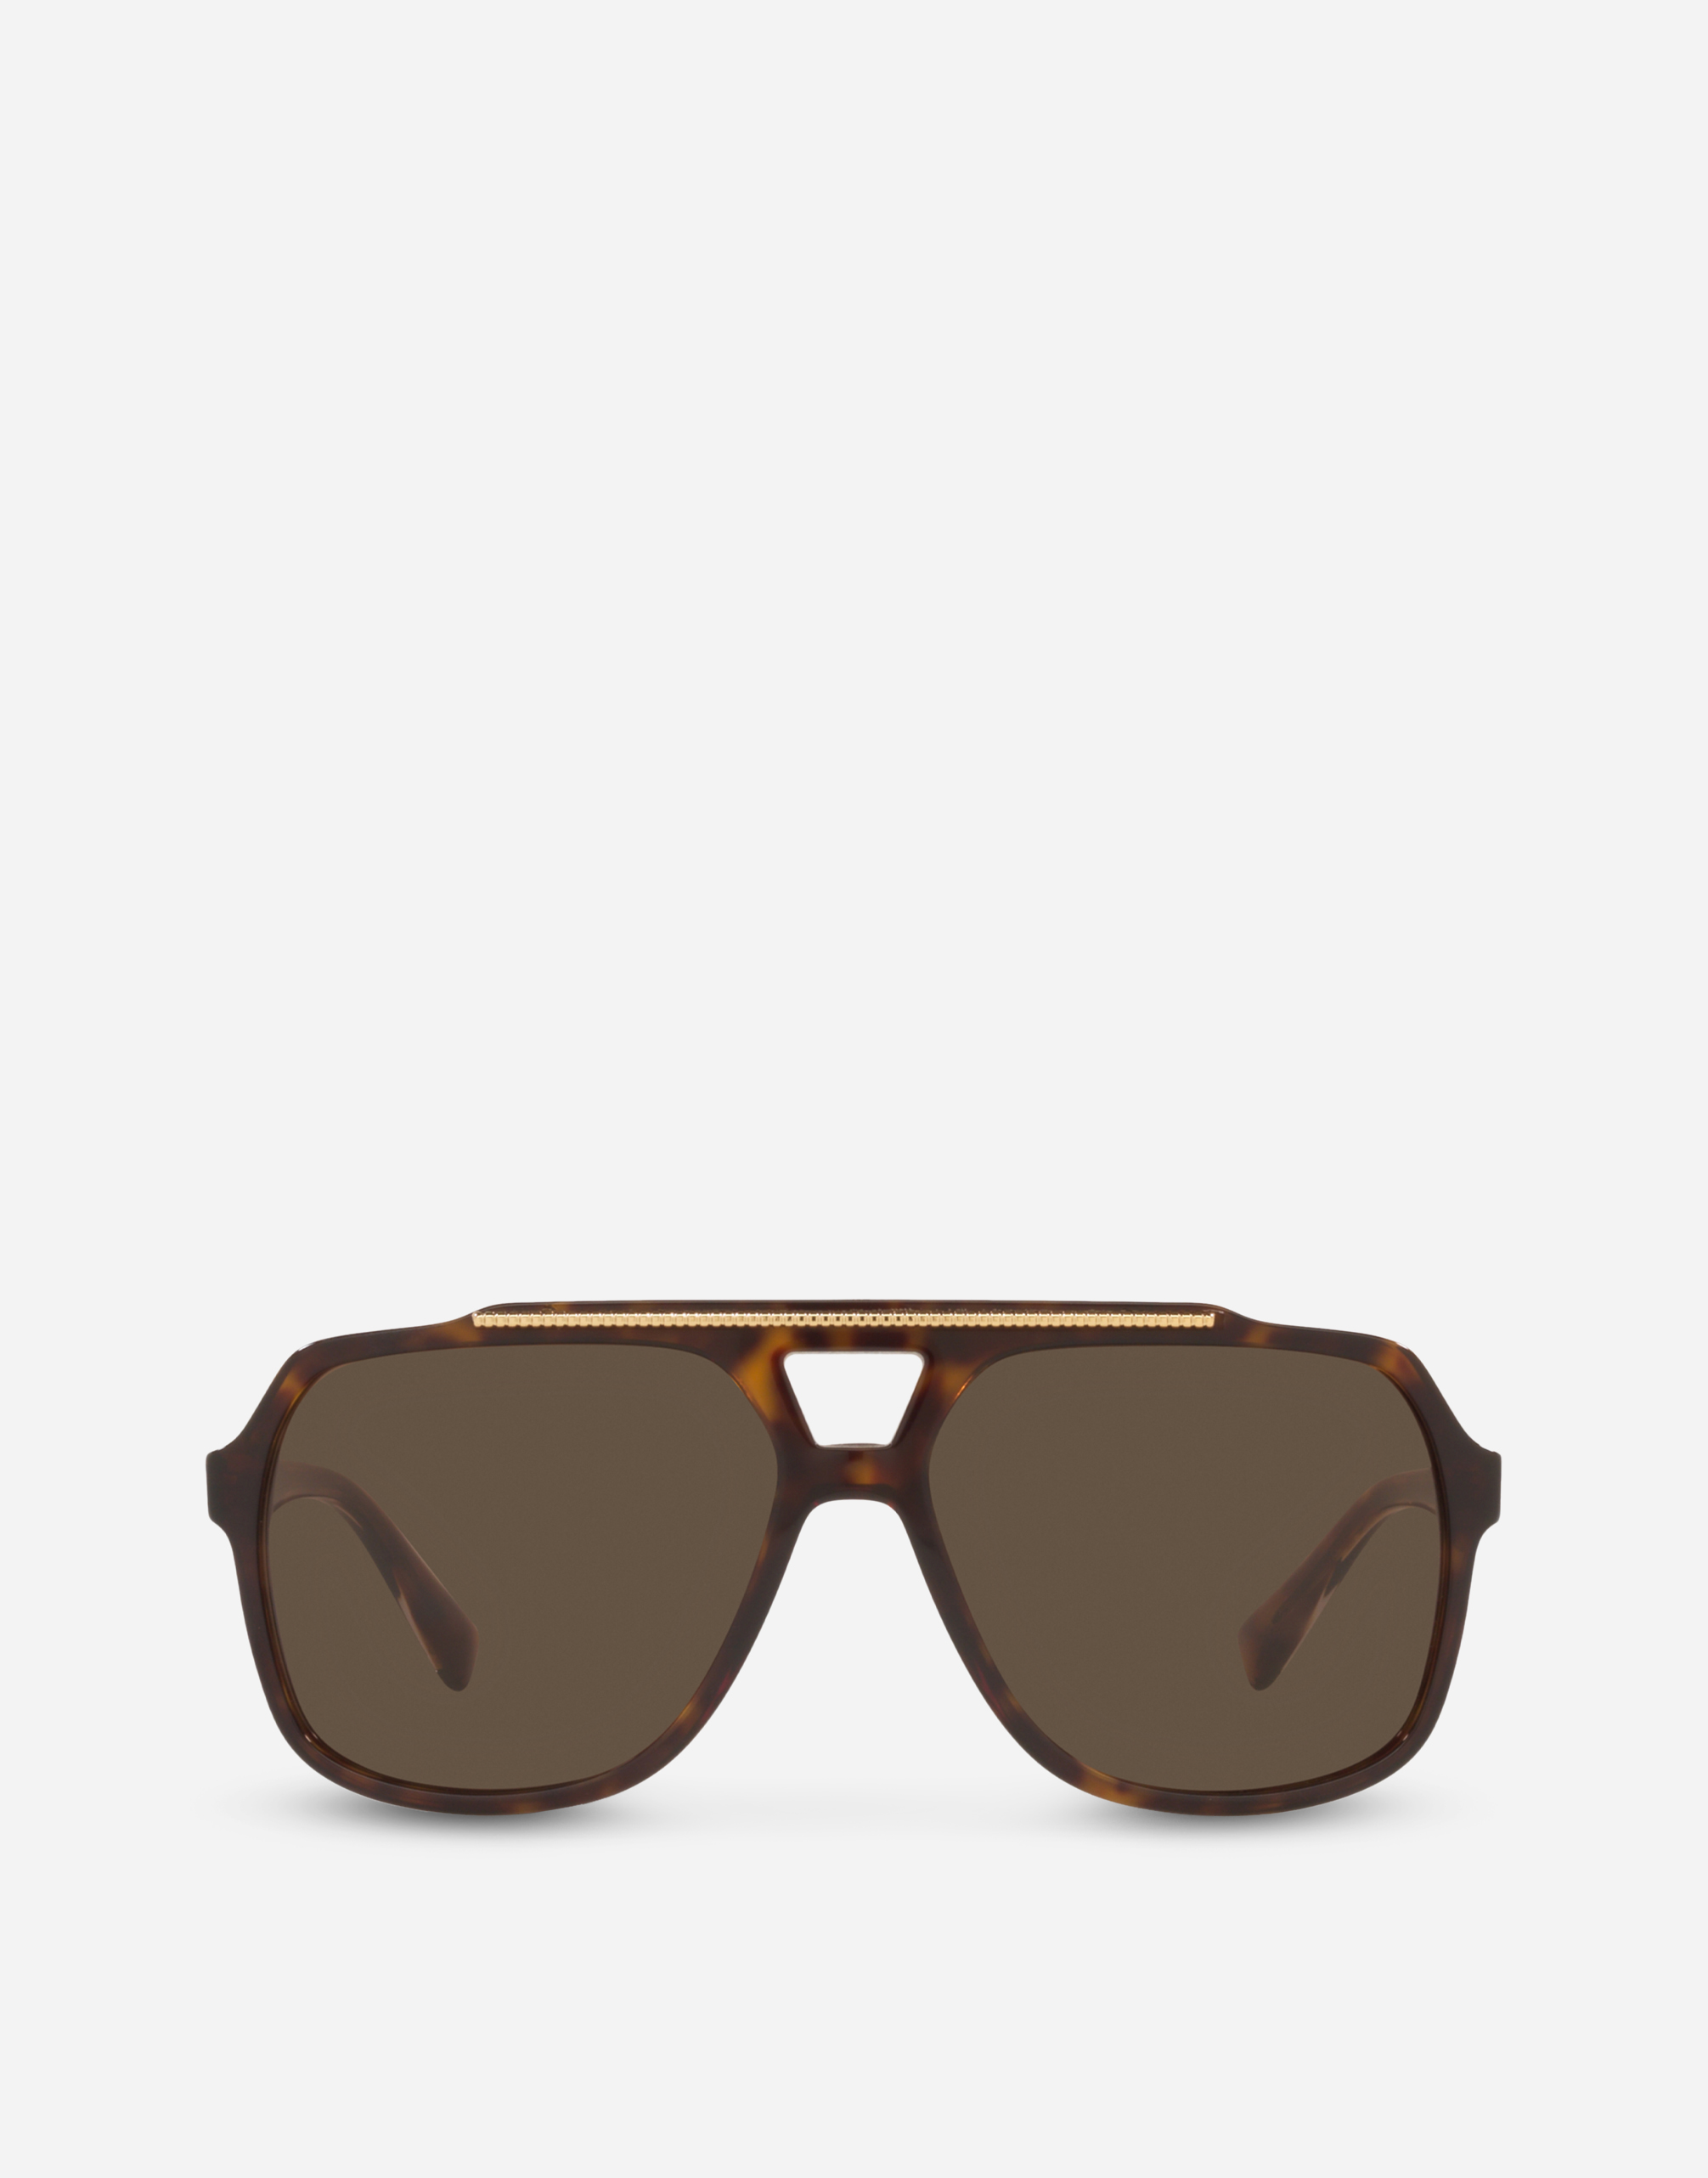 Gros grain sunglasses in Havana